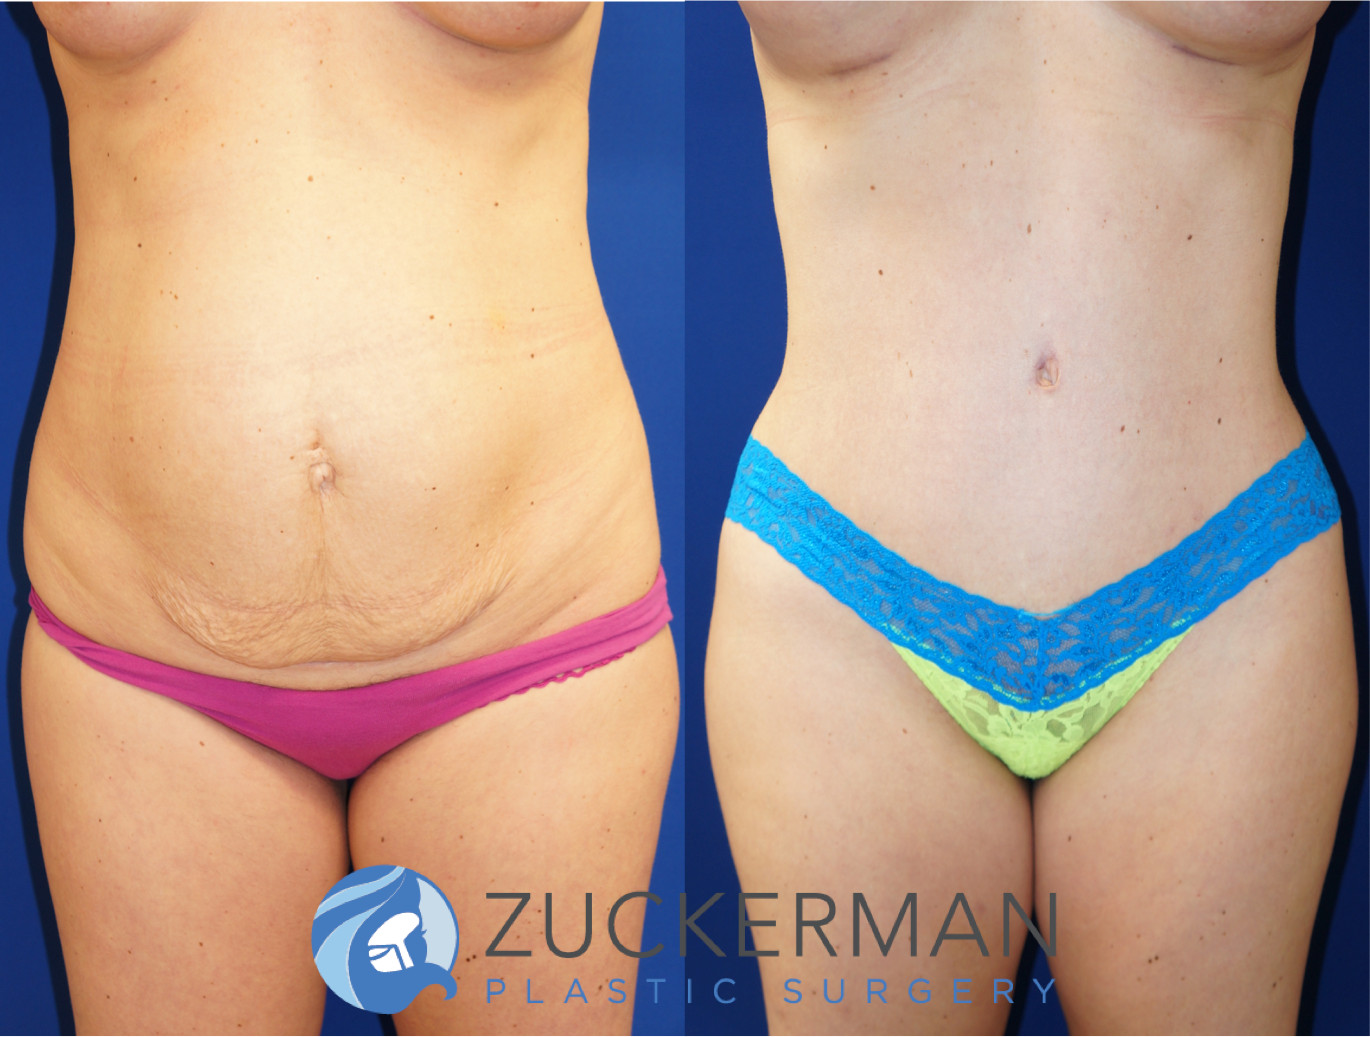 tummy tuck, abdominoplasty, before and after, joshua zuckerman